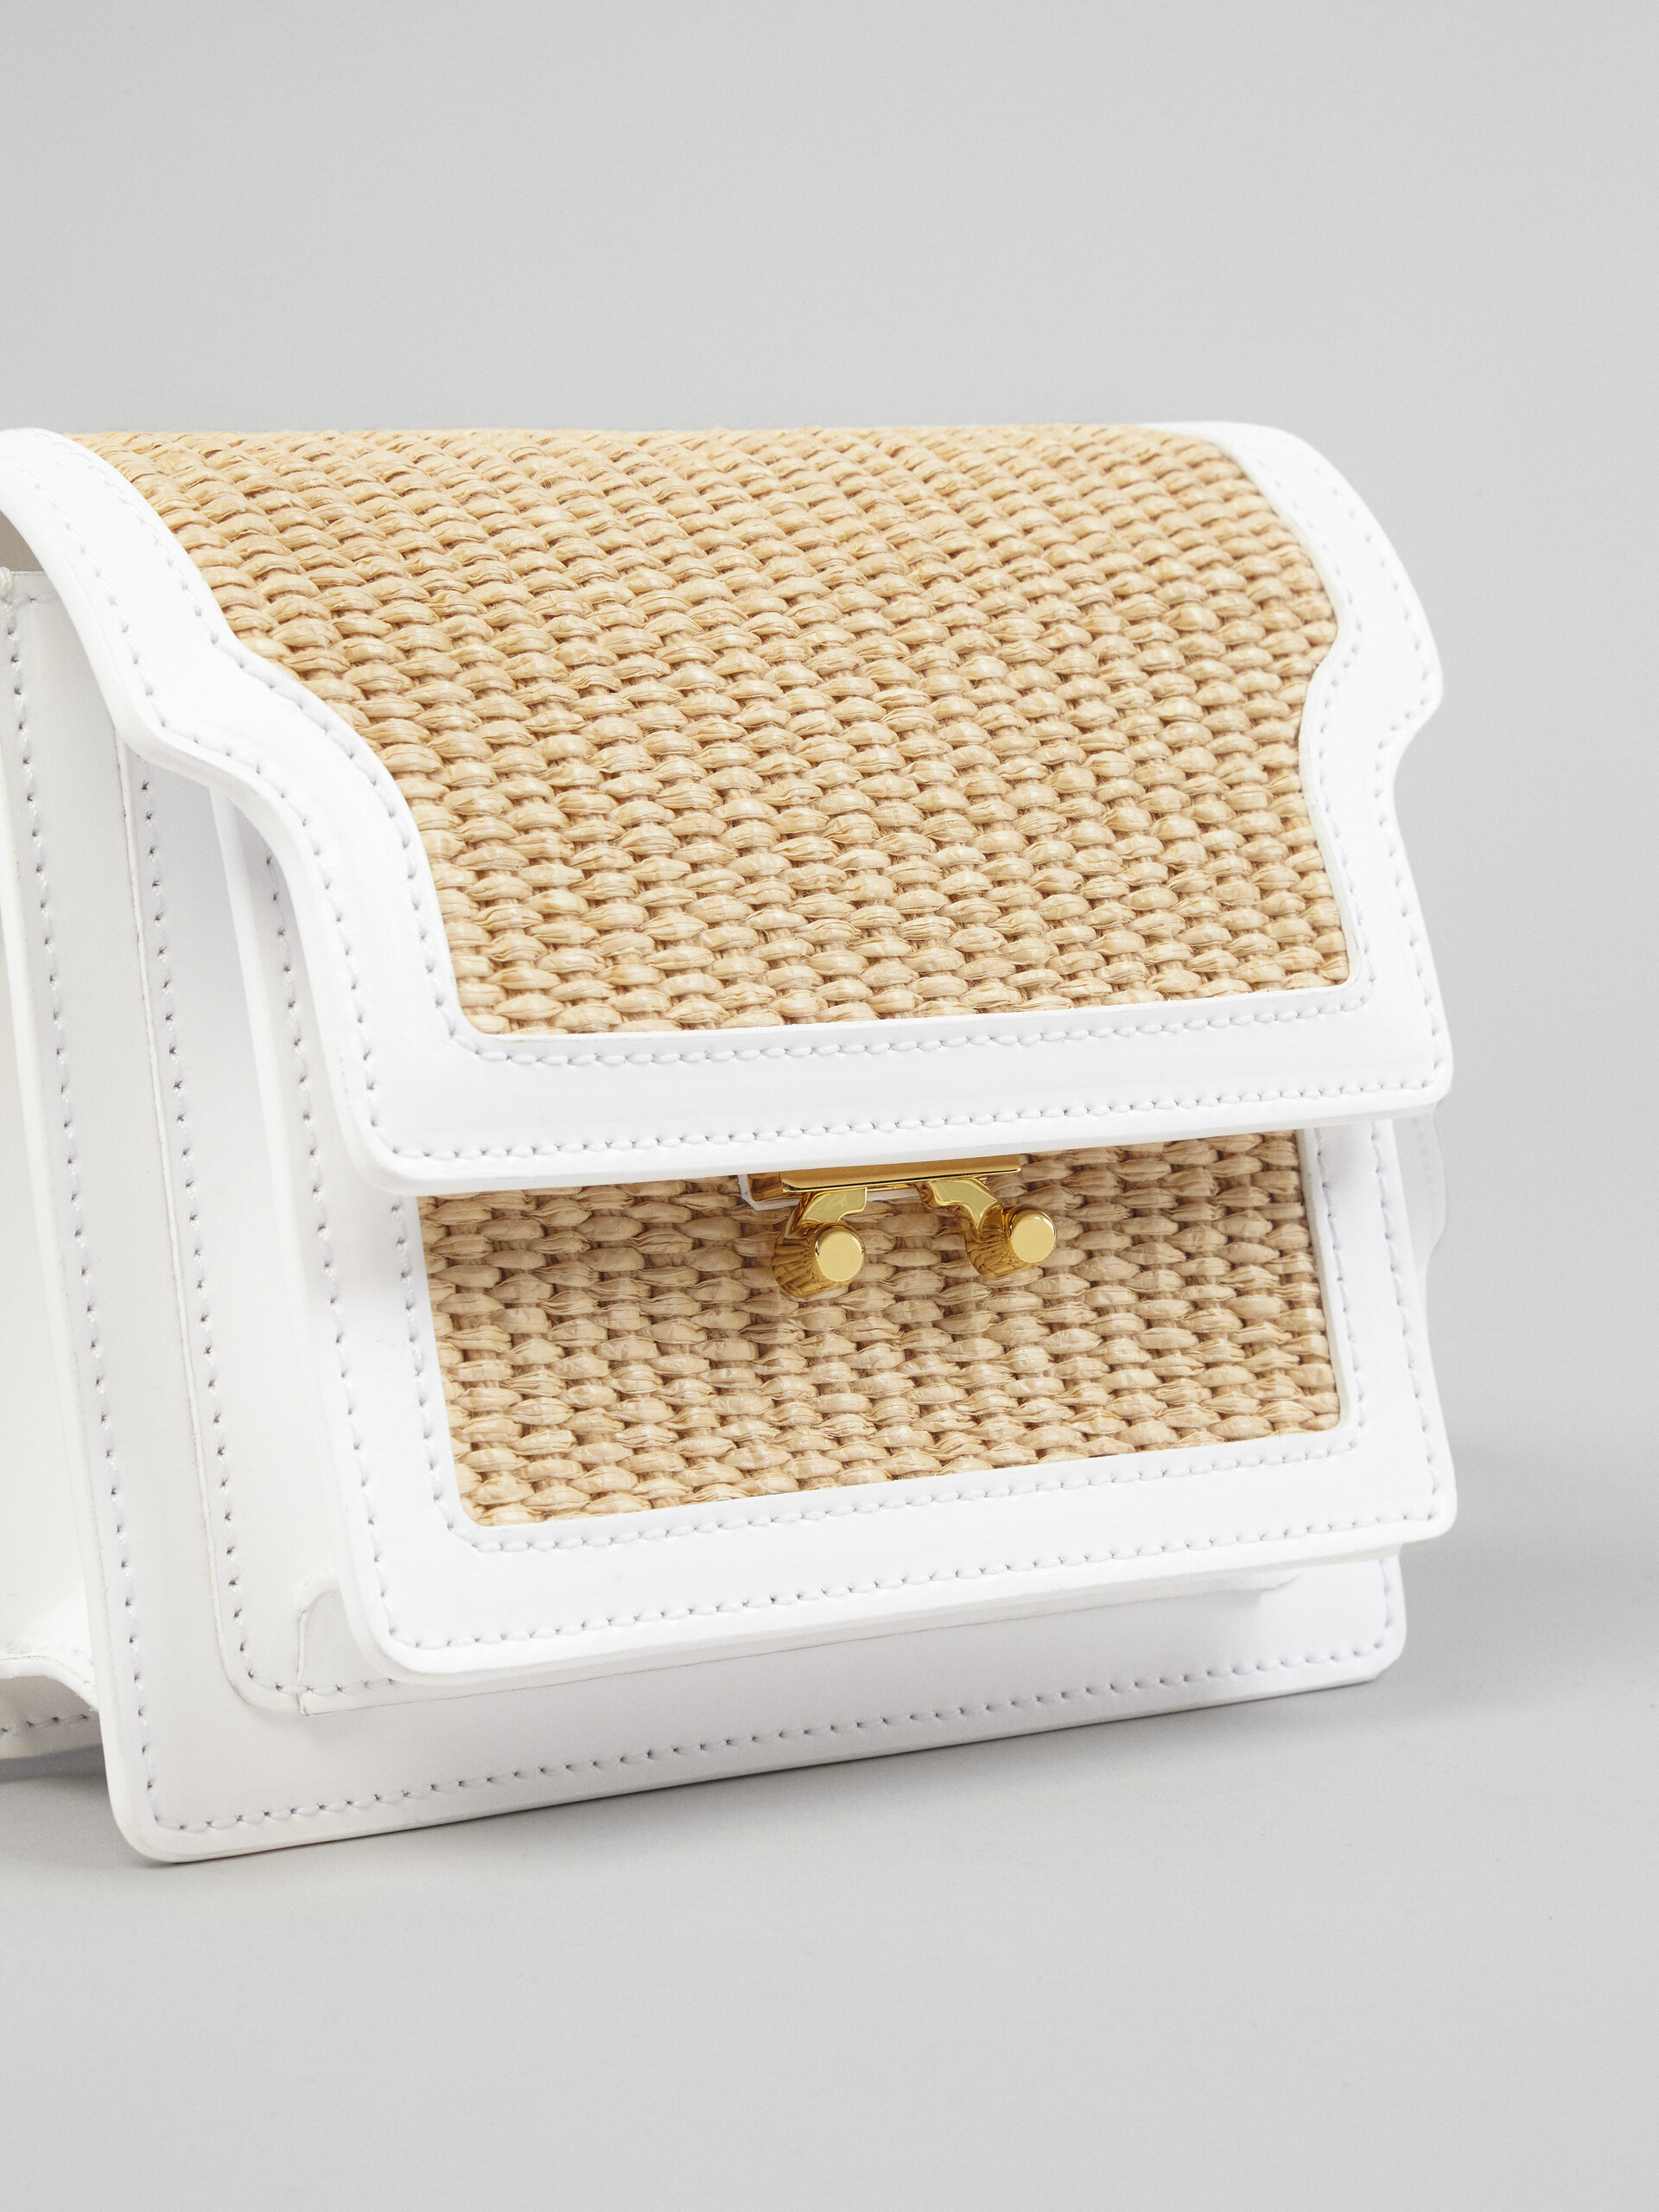 TRUNK SOFT mini bag in white leather and raffia - Shoulder Bag - Image 3